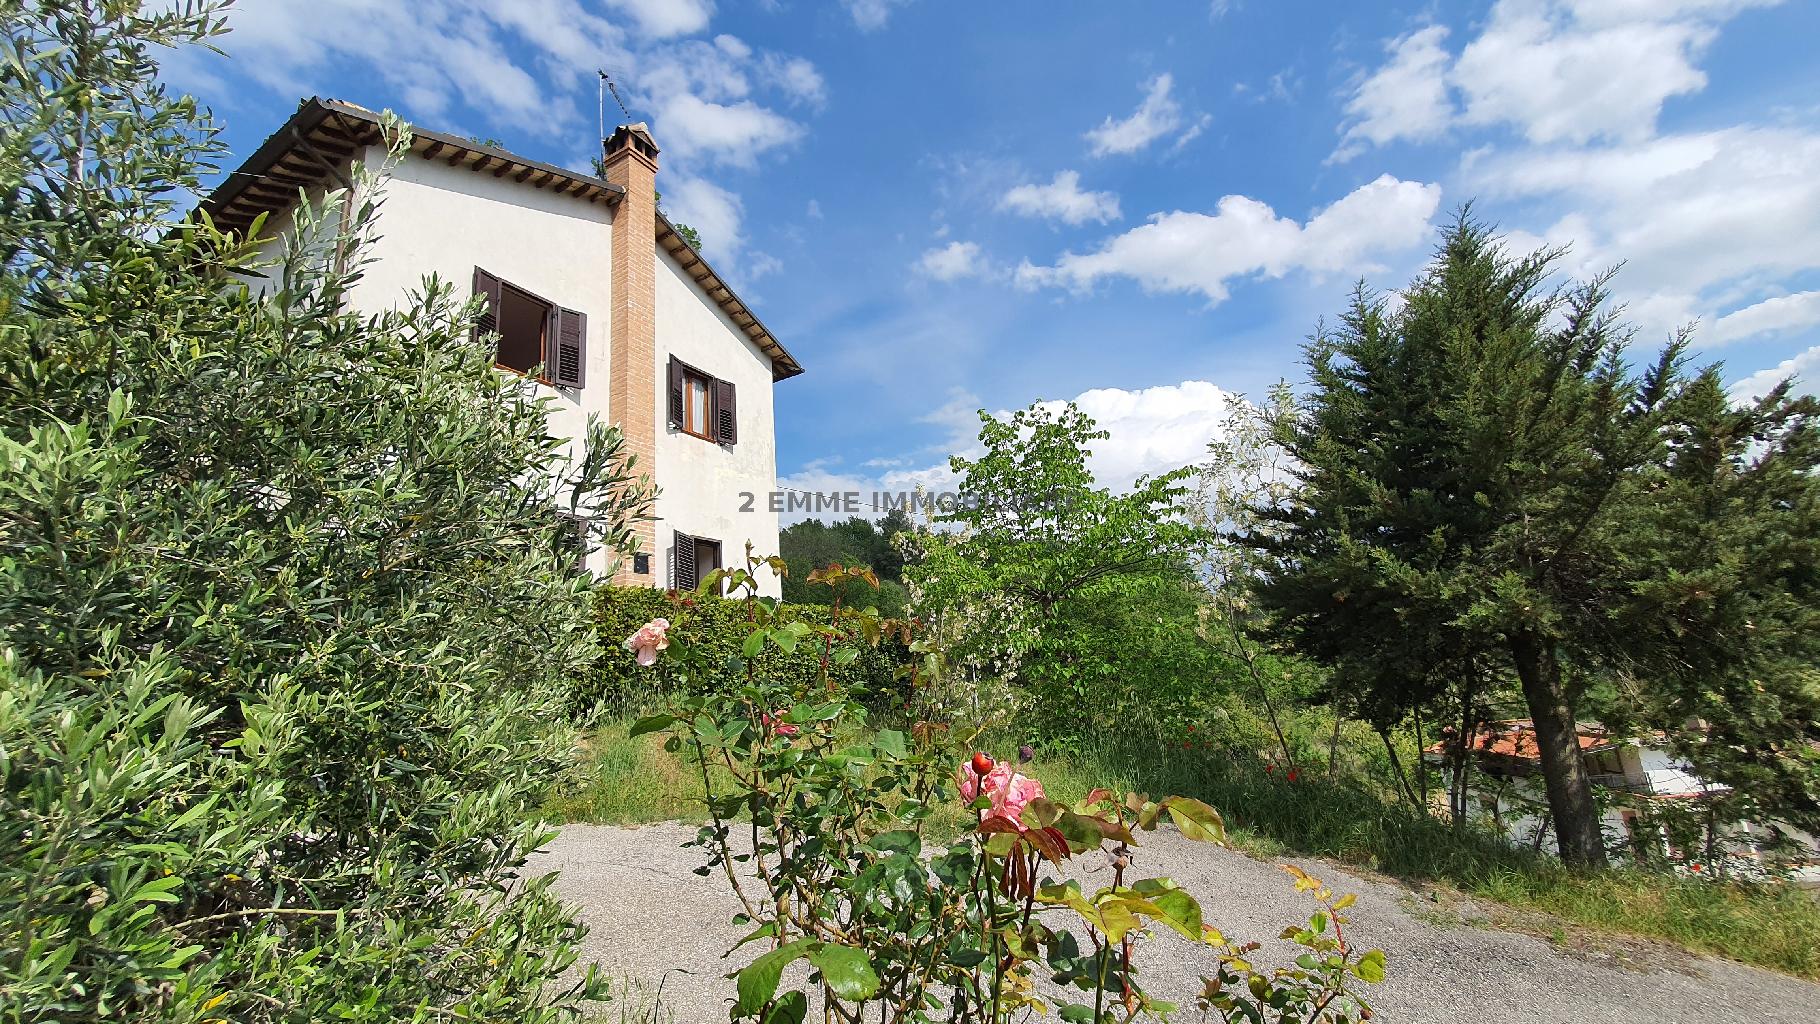 Casa indipendente con giardino in via case sparse, Venarotta